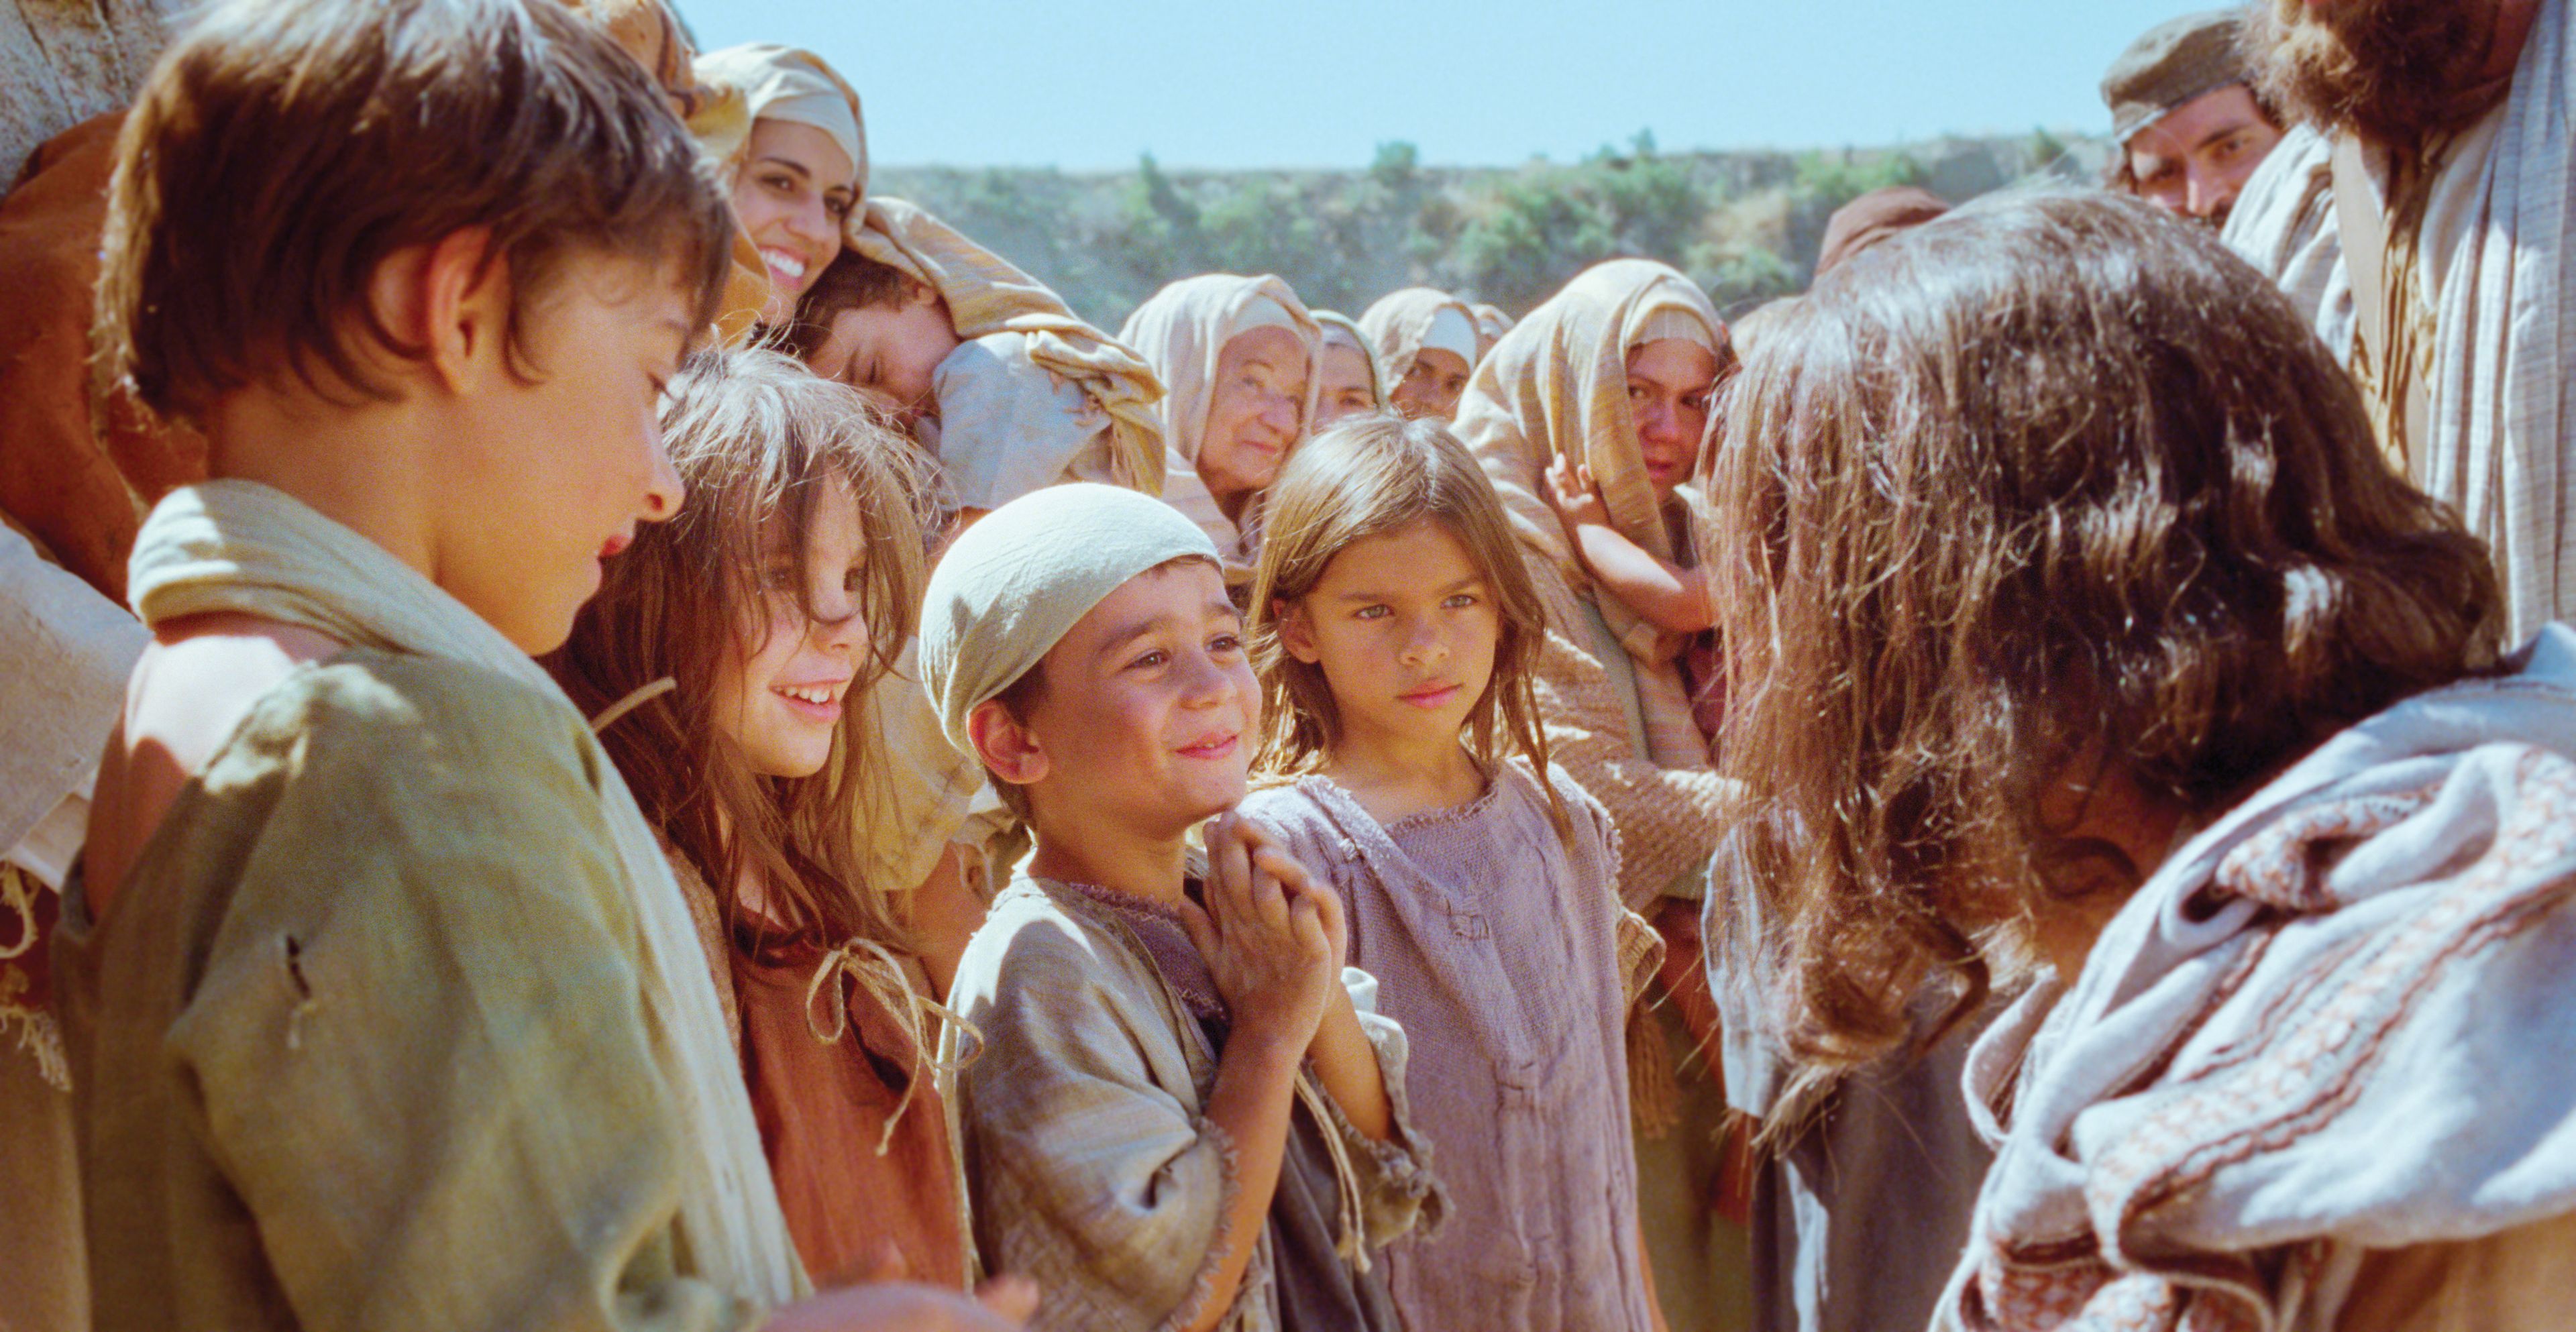 Jesus speaks with the little children.